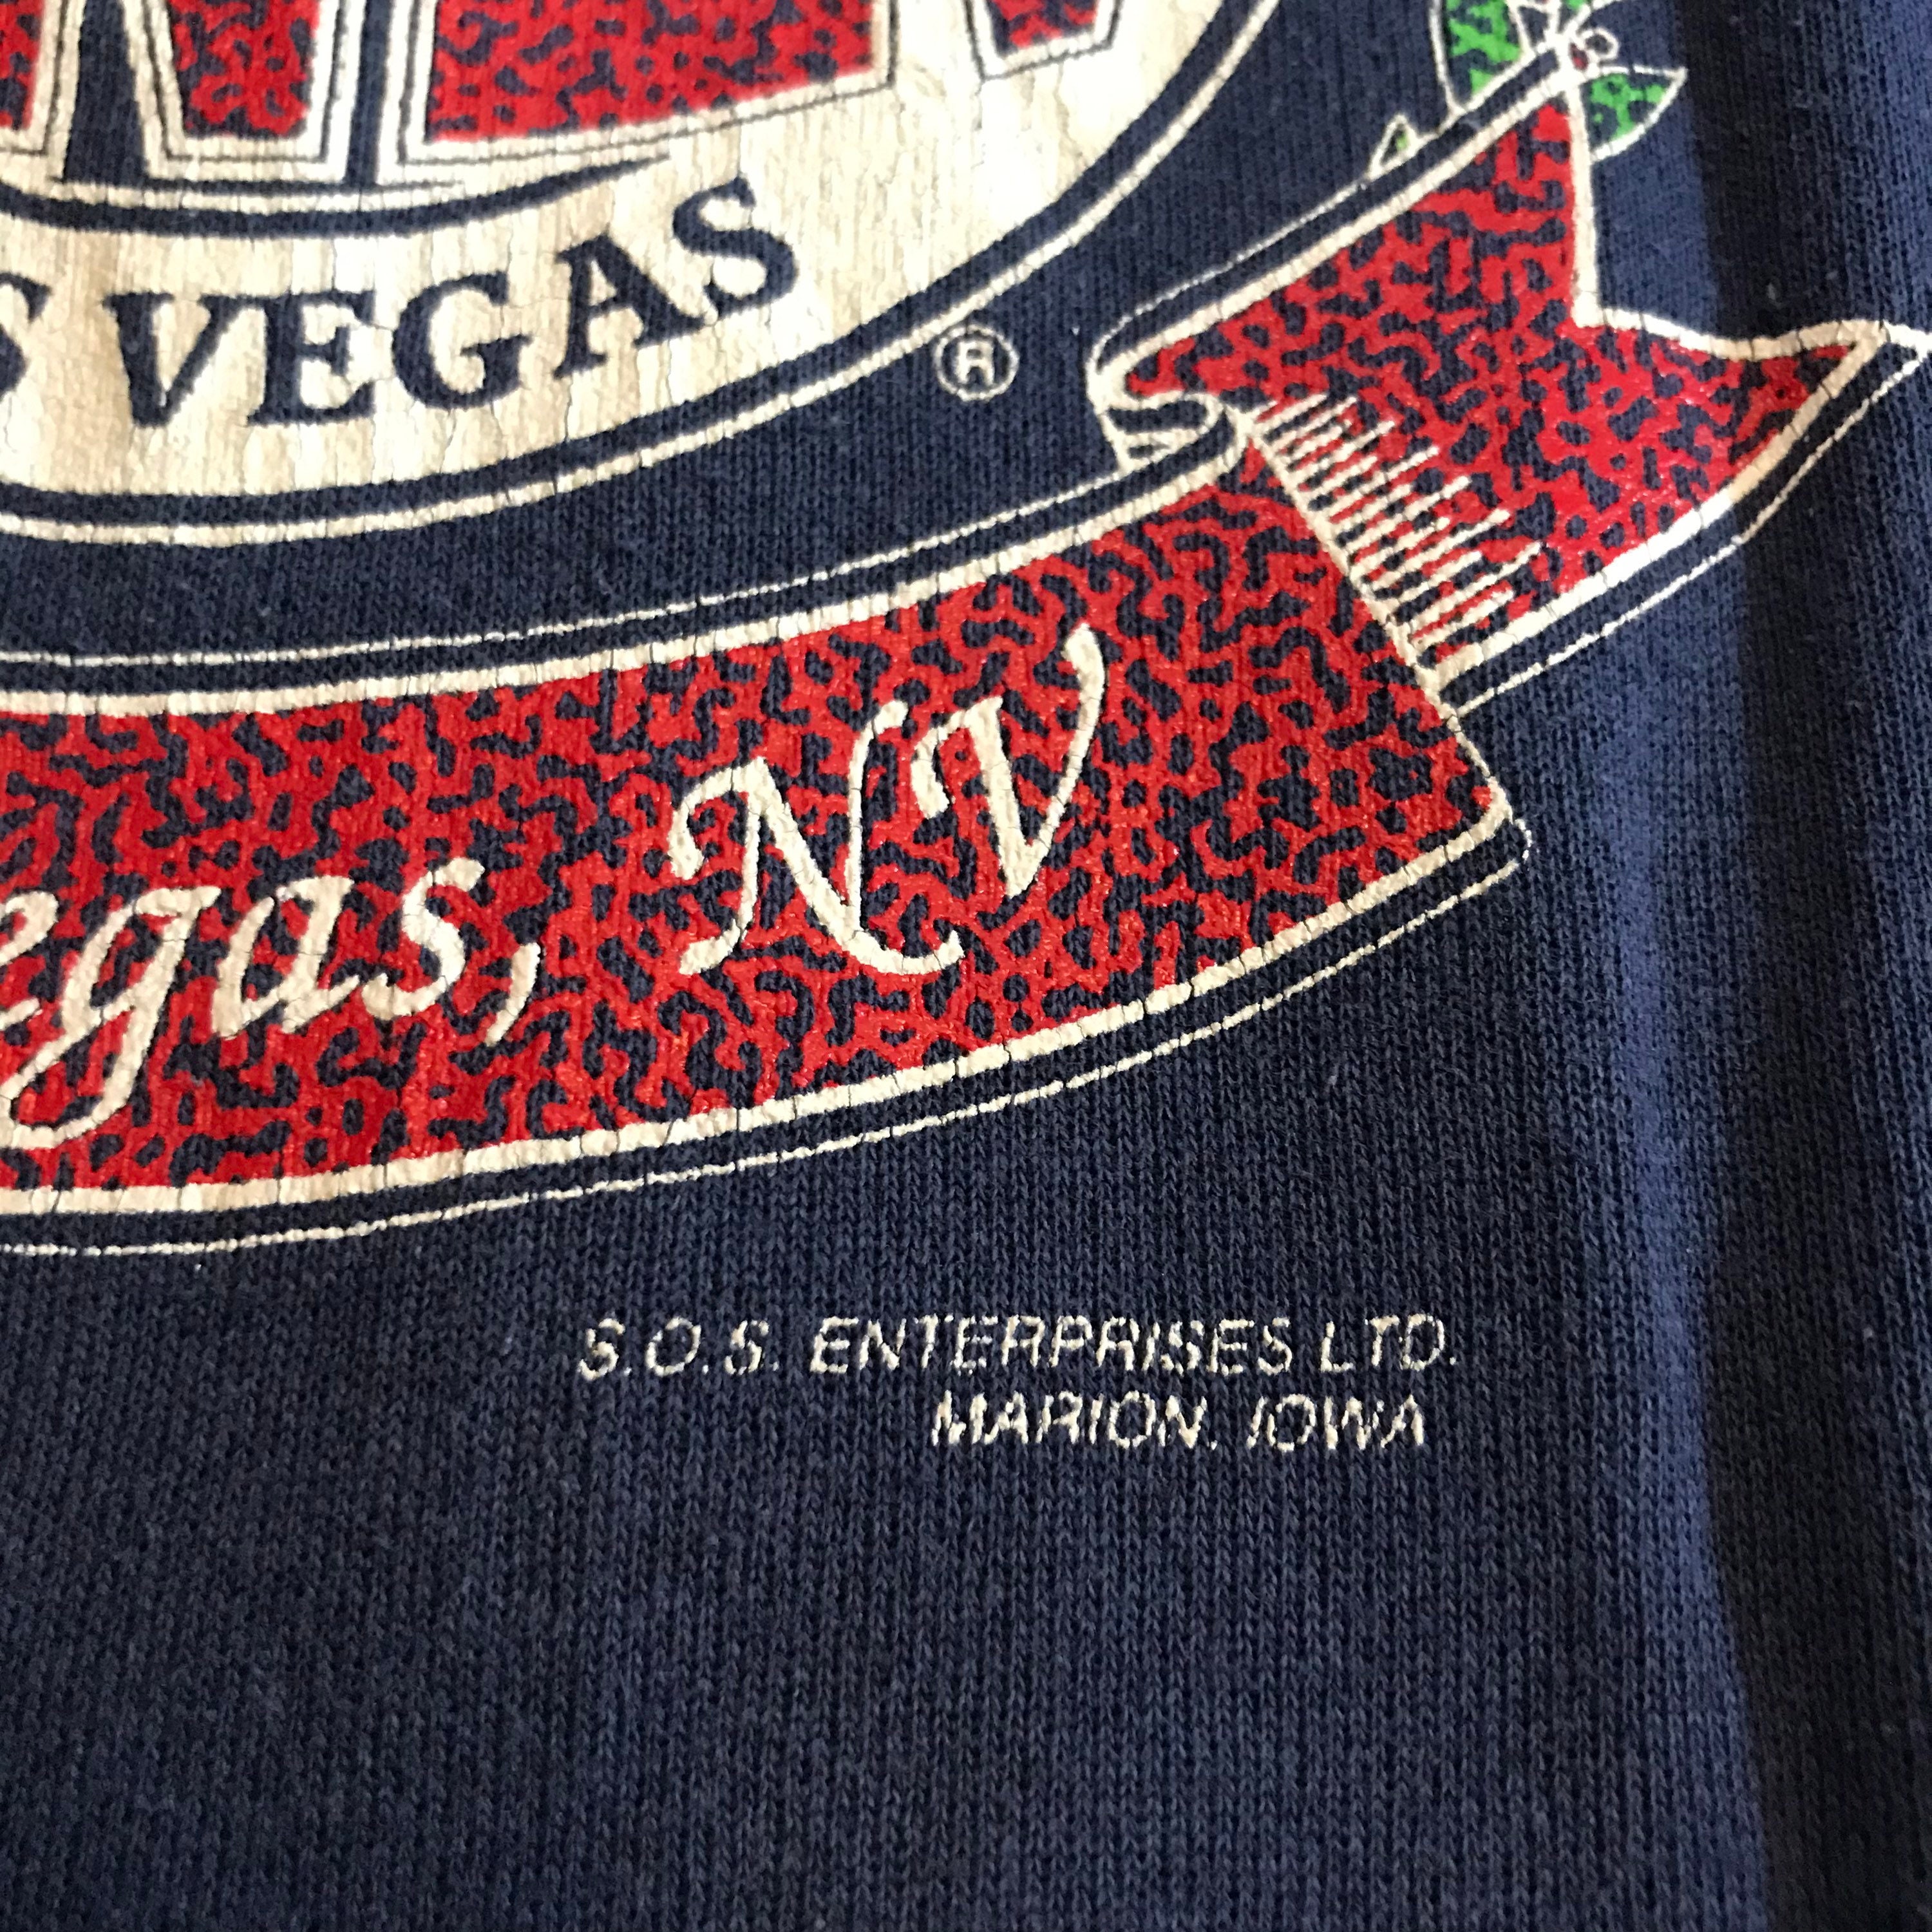 Vintage 90s University of Nevada Las Vegas Champion tag | Etsy